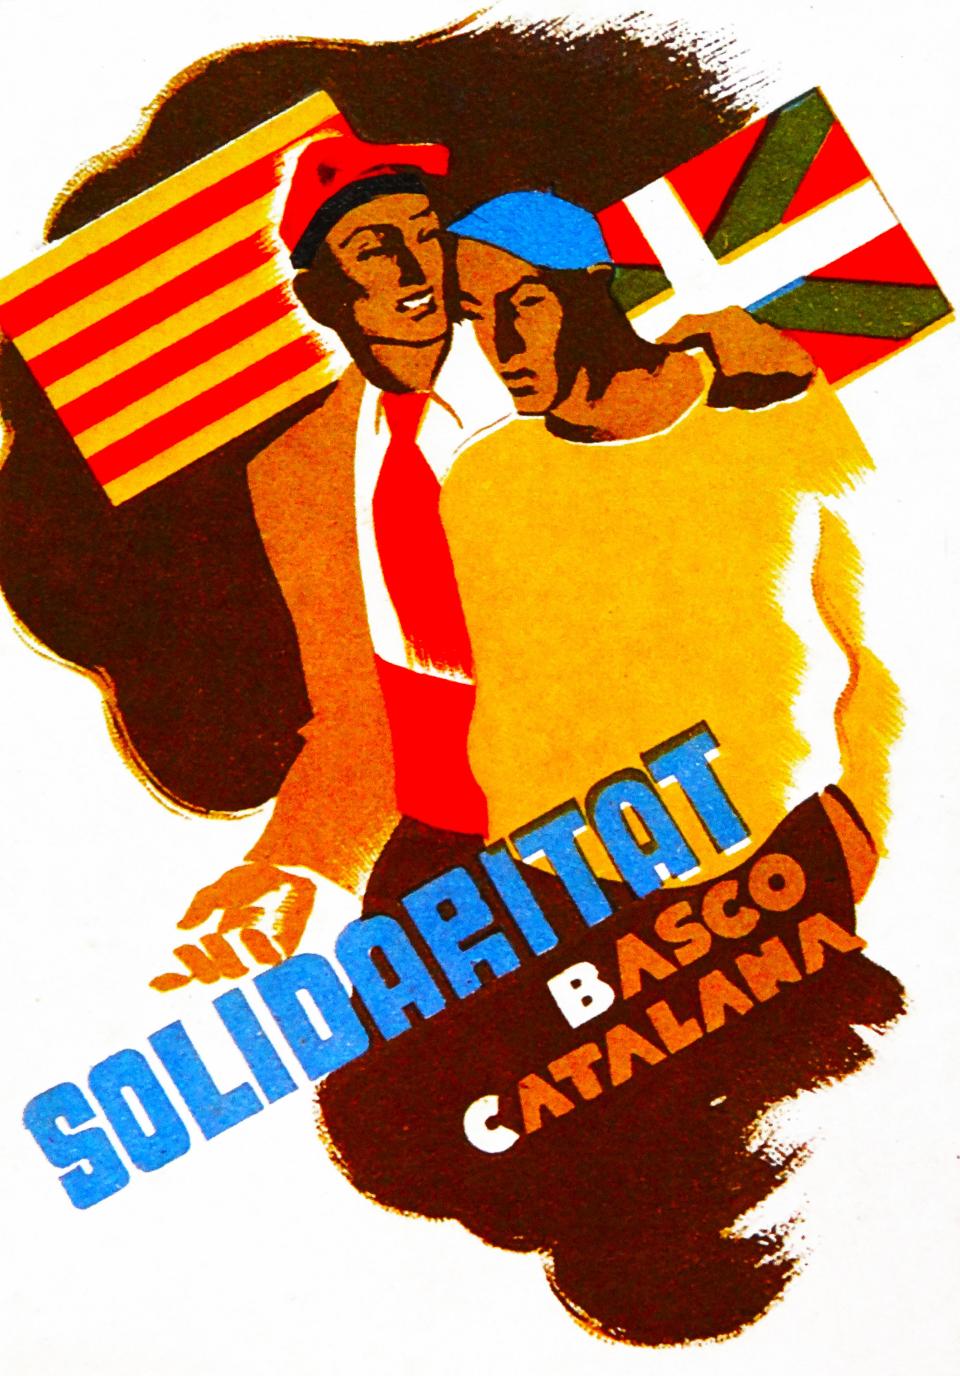 “Solidaridad vasco-catalana”